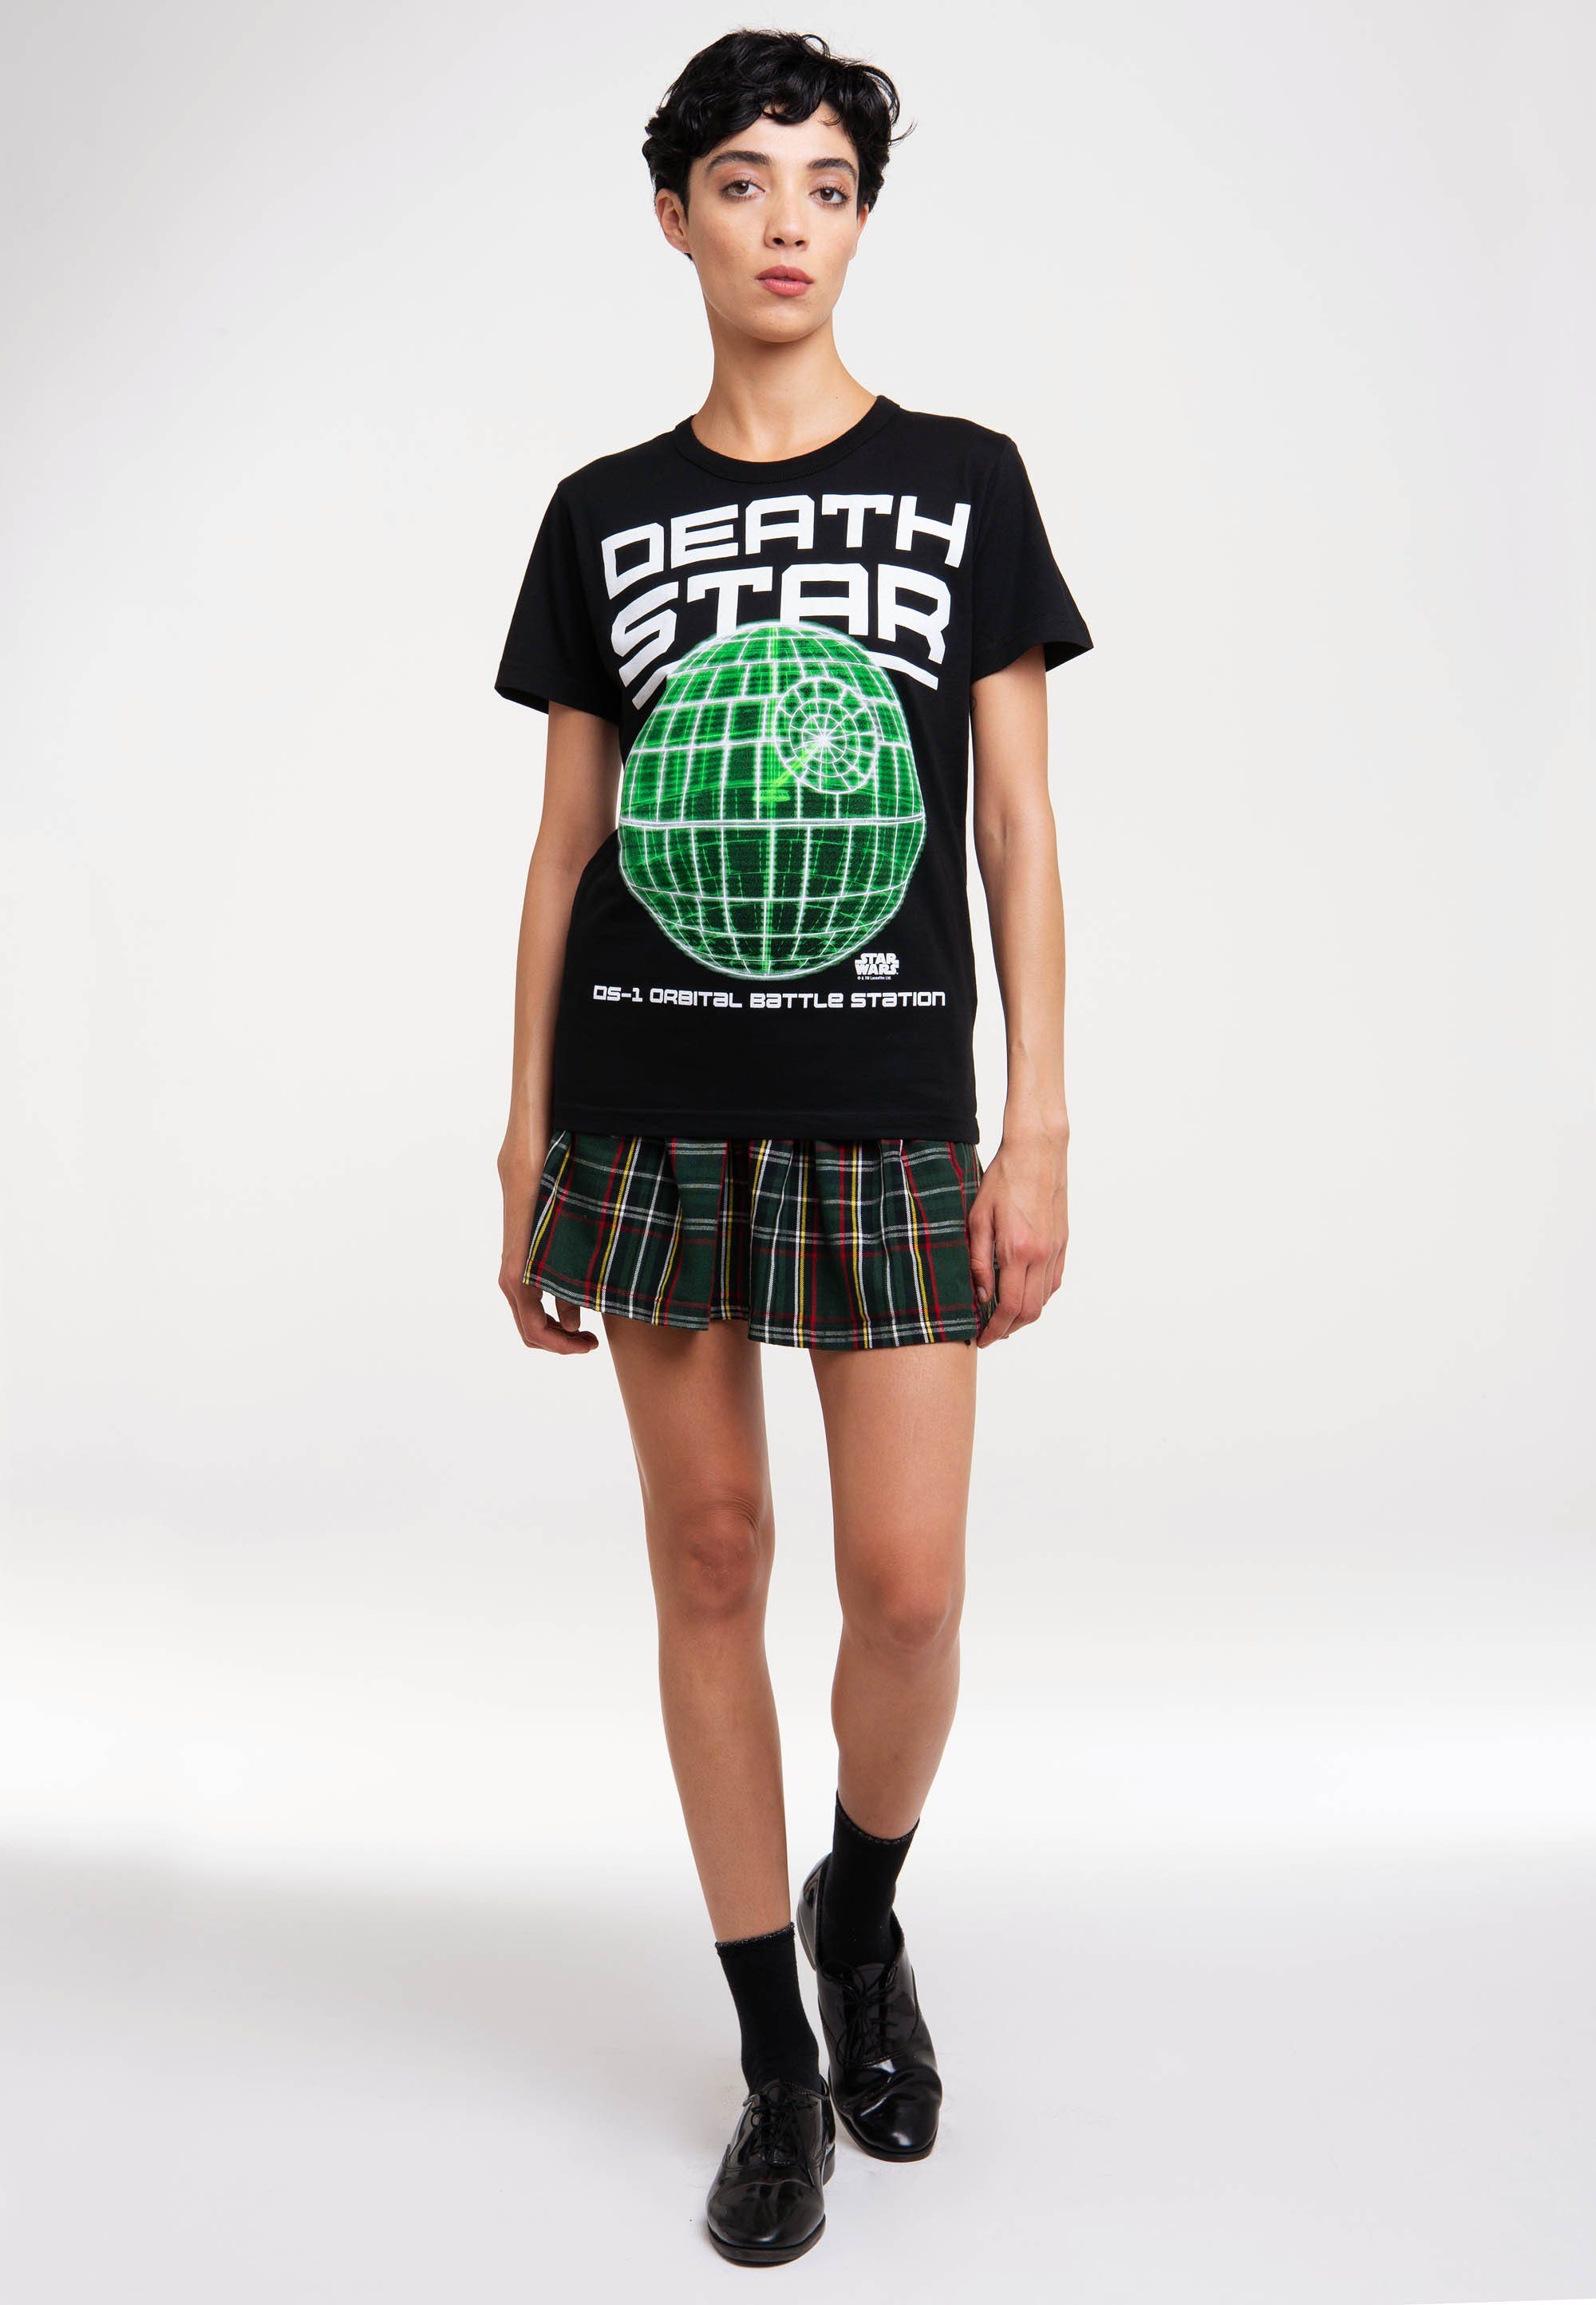 LOGOSHIRT T-Shirt Star Wars - Death Star mit coolem Print